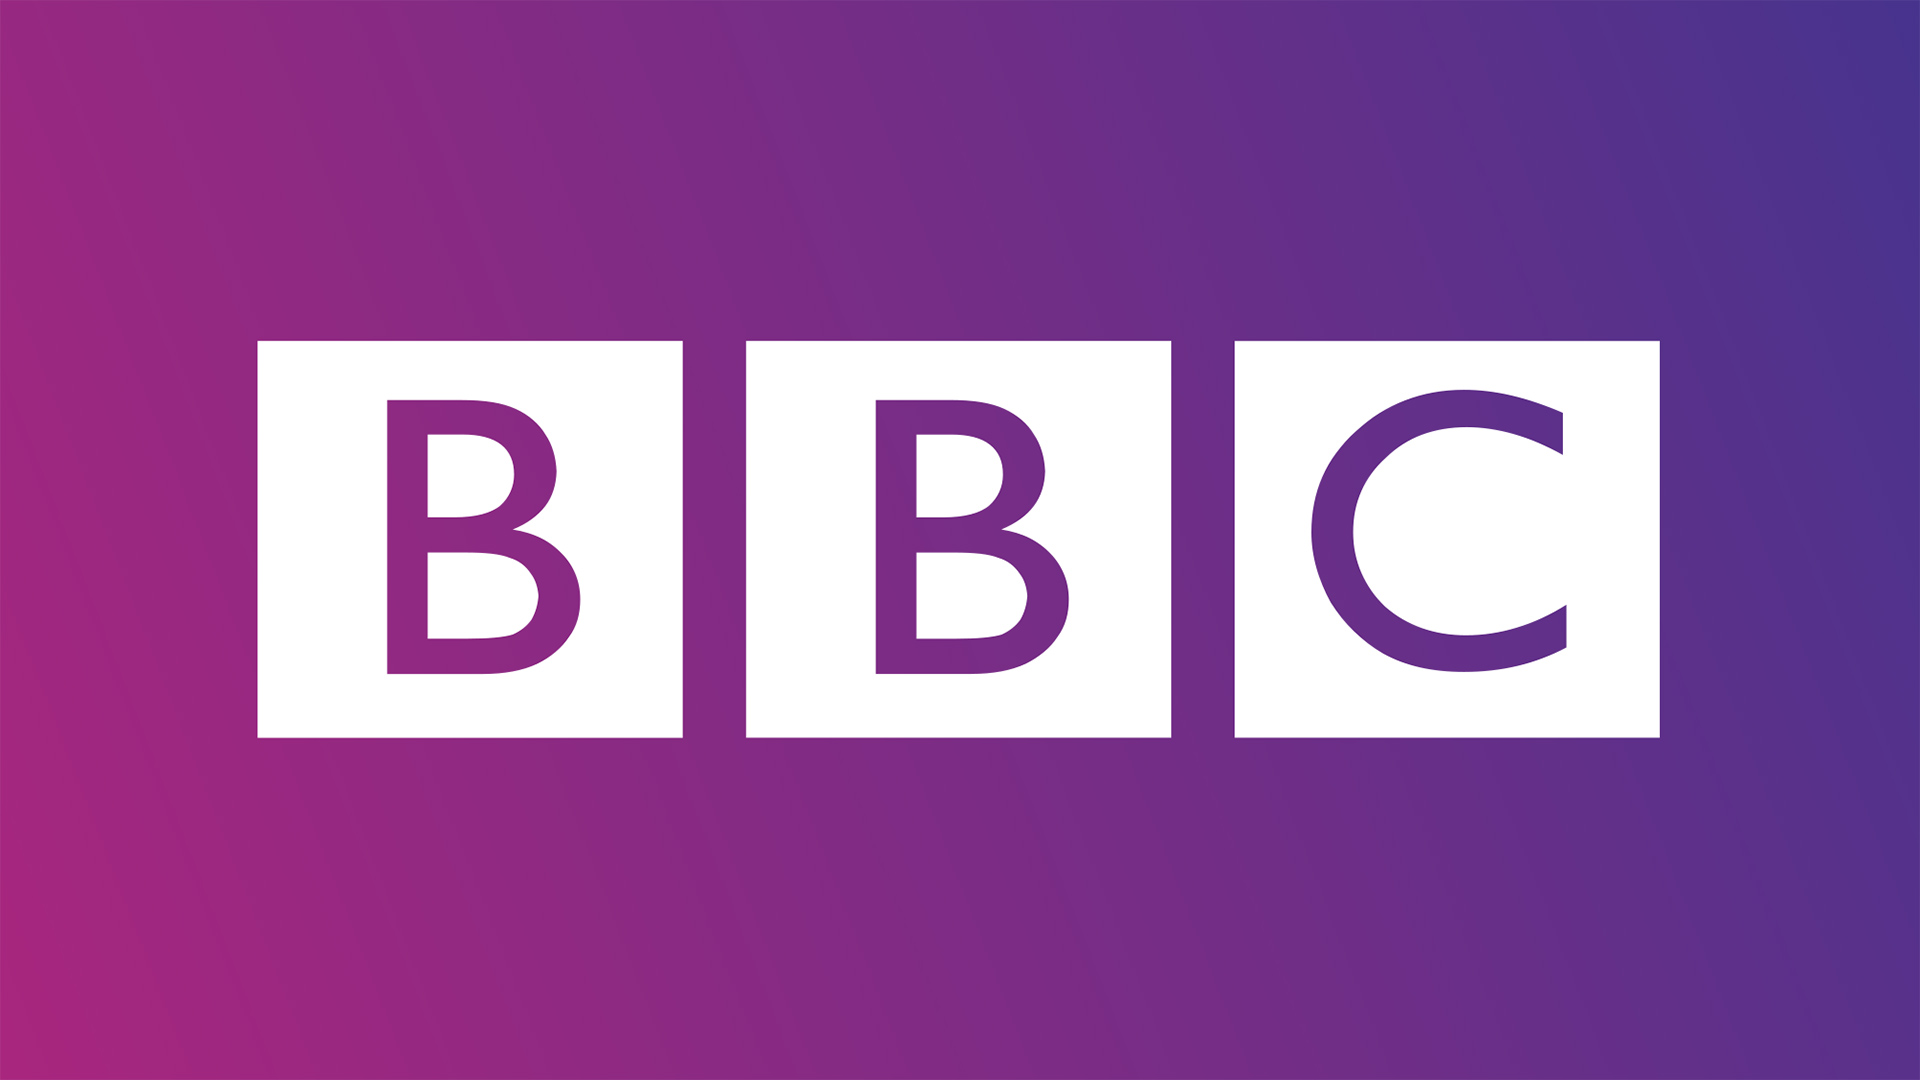 Bbc co uk. Bbc логотип. Канал bbc. ВВС Телеканал. Телеканал bbc лого.